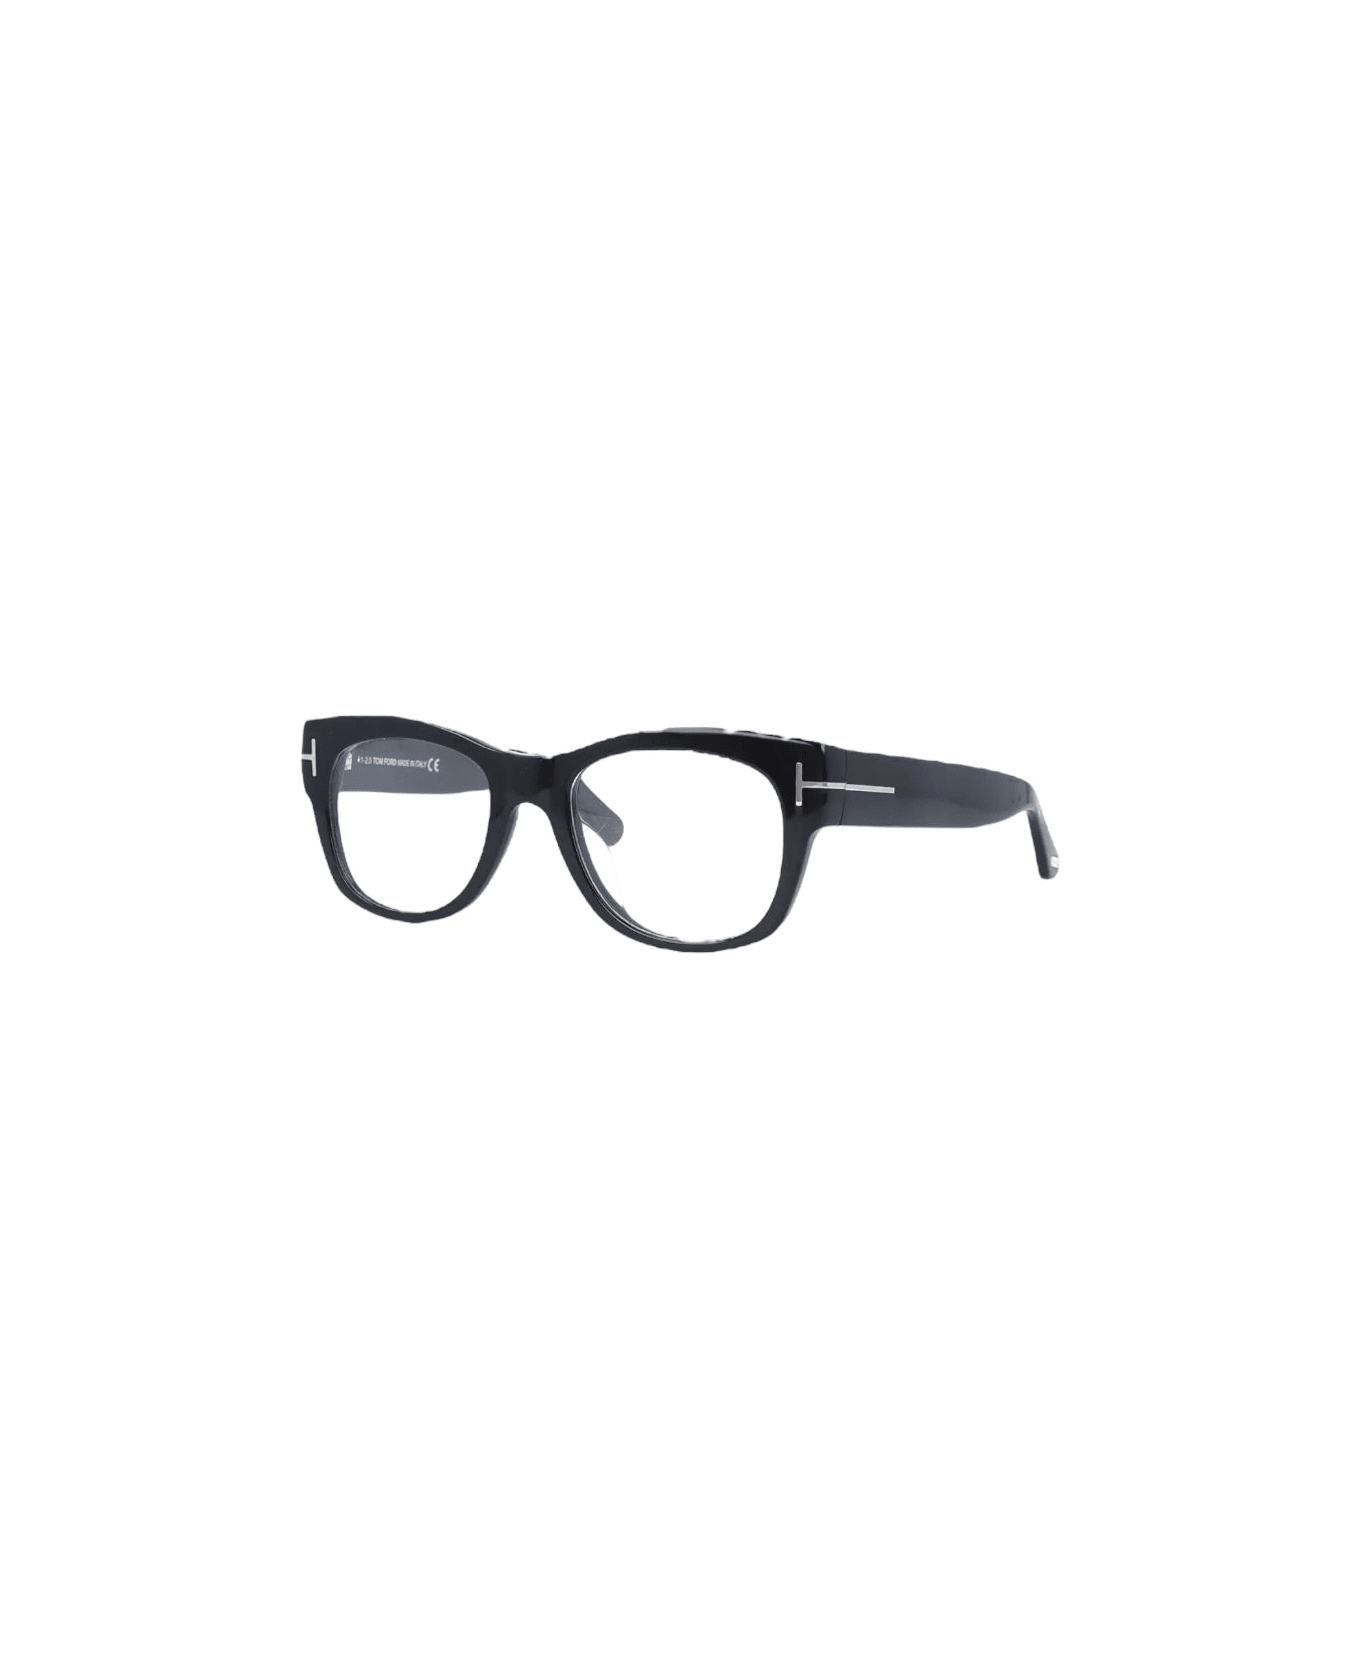 Tom Ford Eyewear Tf 5040 - Black Glasses